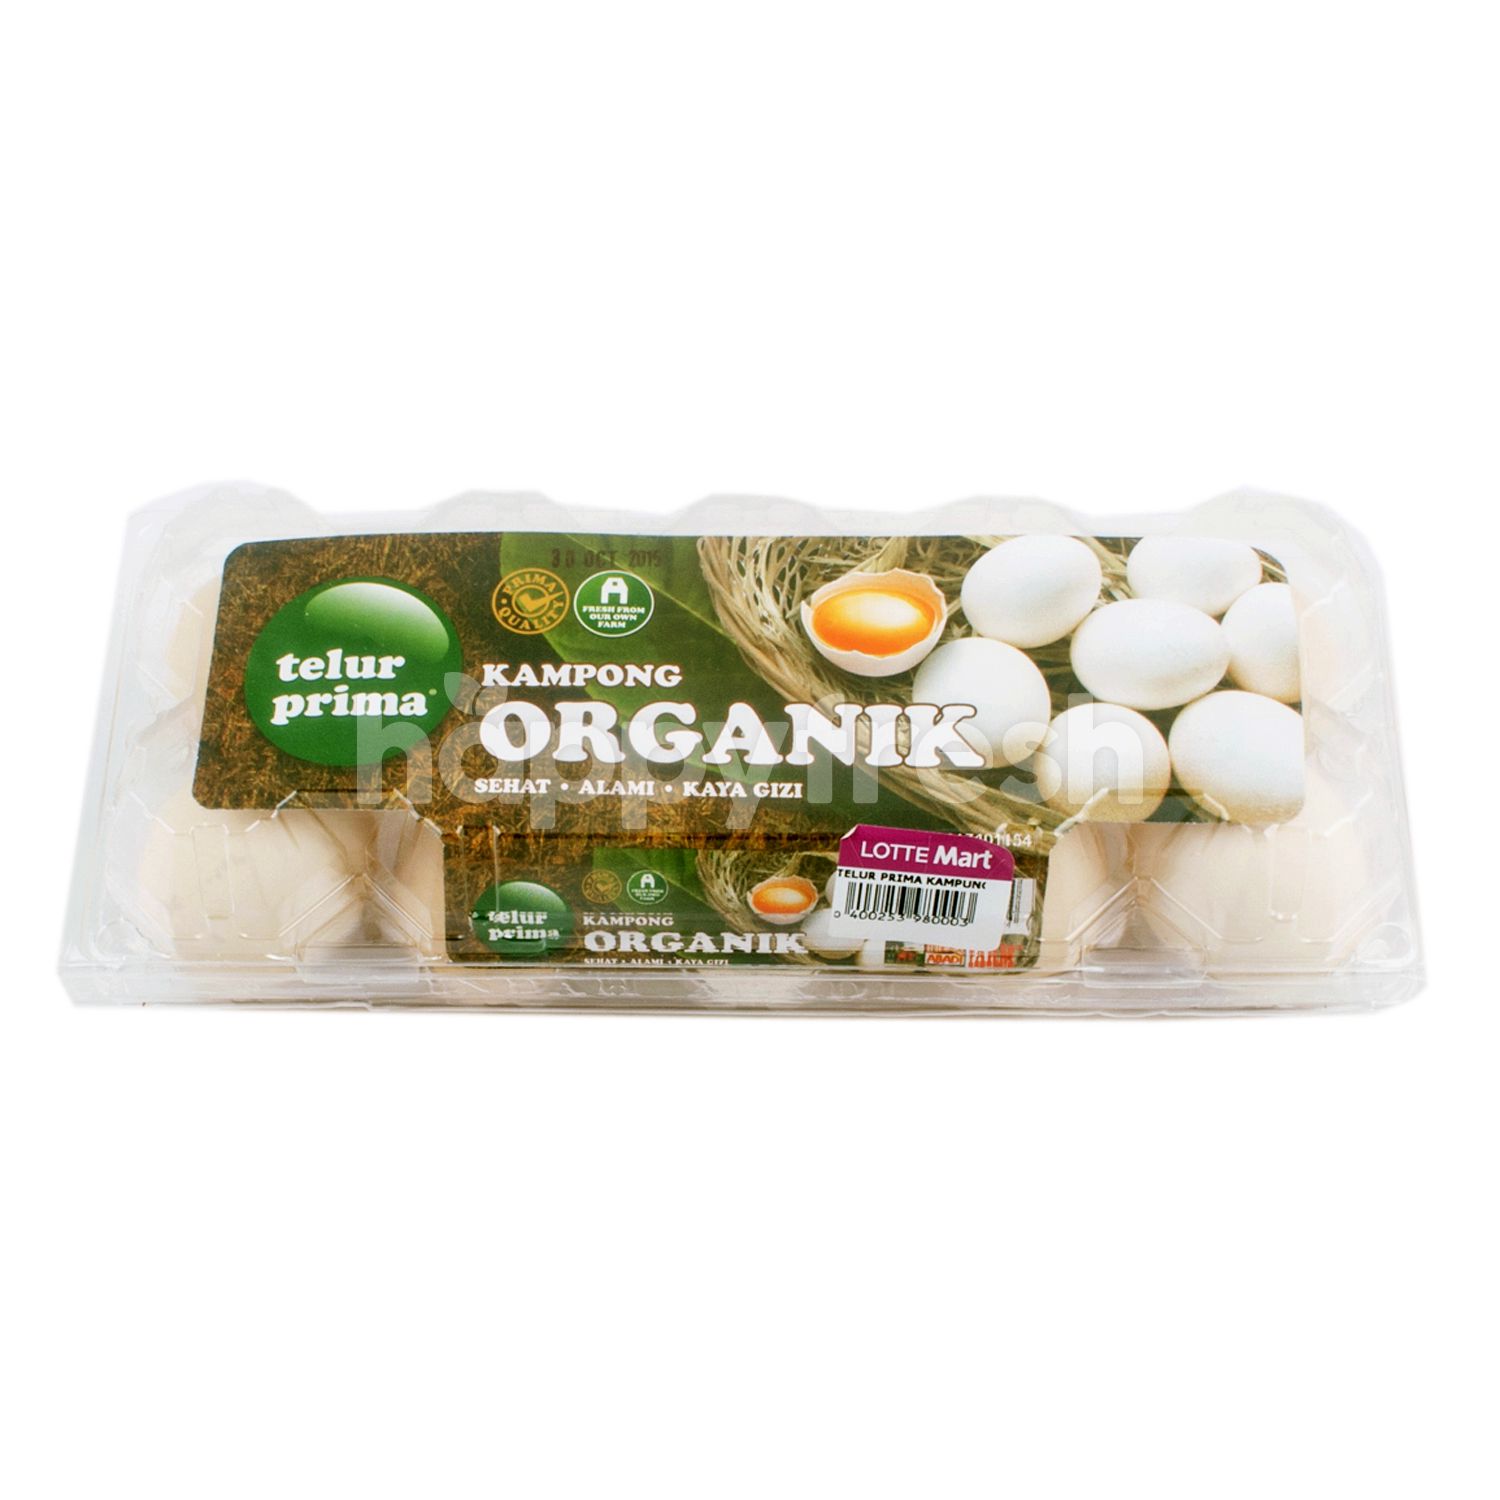 Jual Telur Prima Organic Kampong Chicken Egg di Lotte Mart - HappyFresh